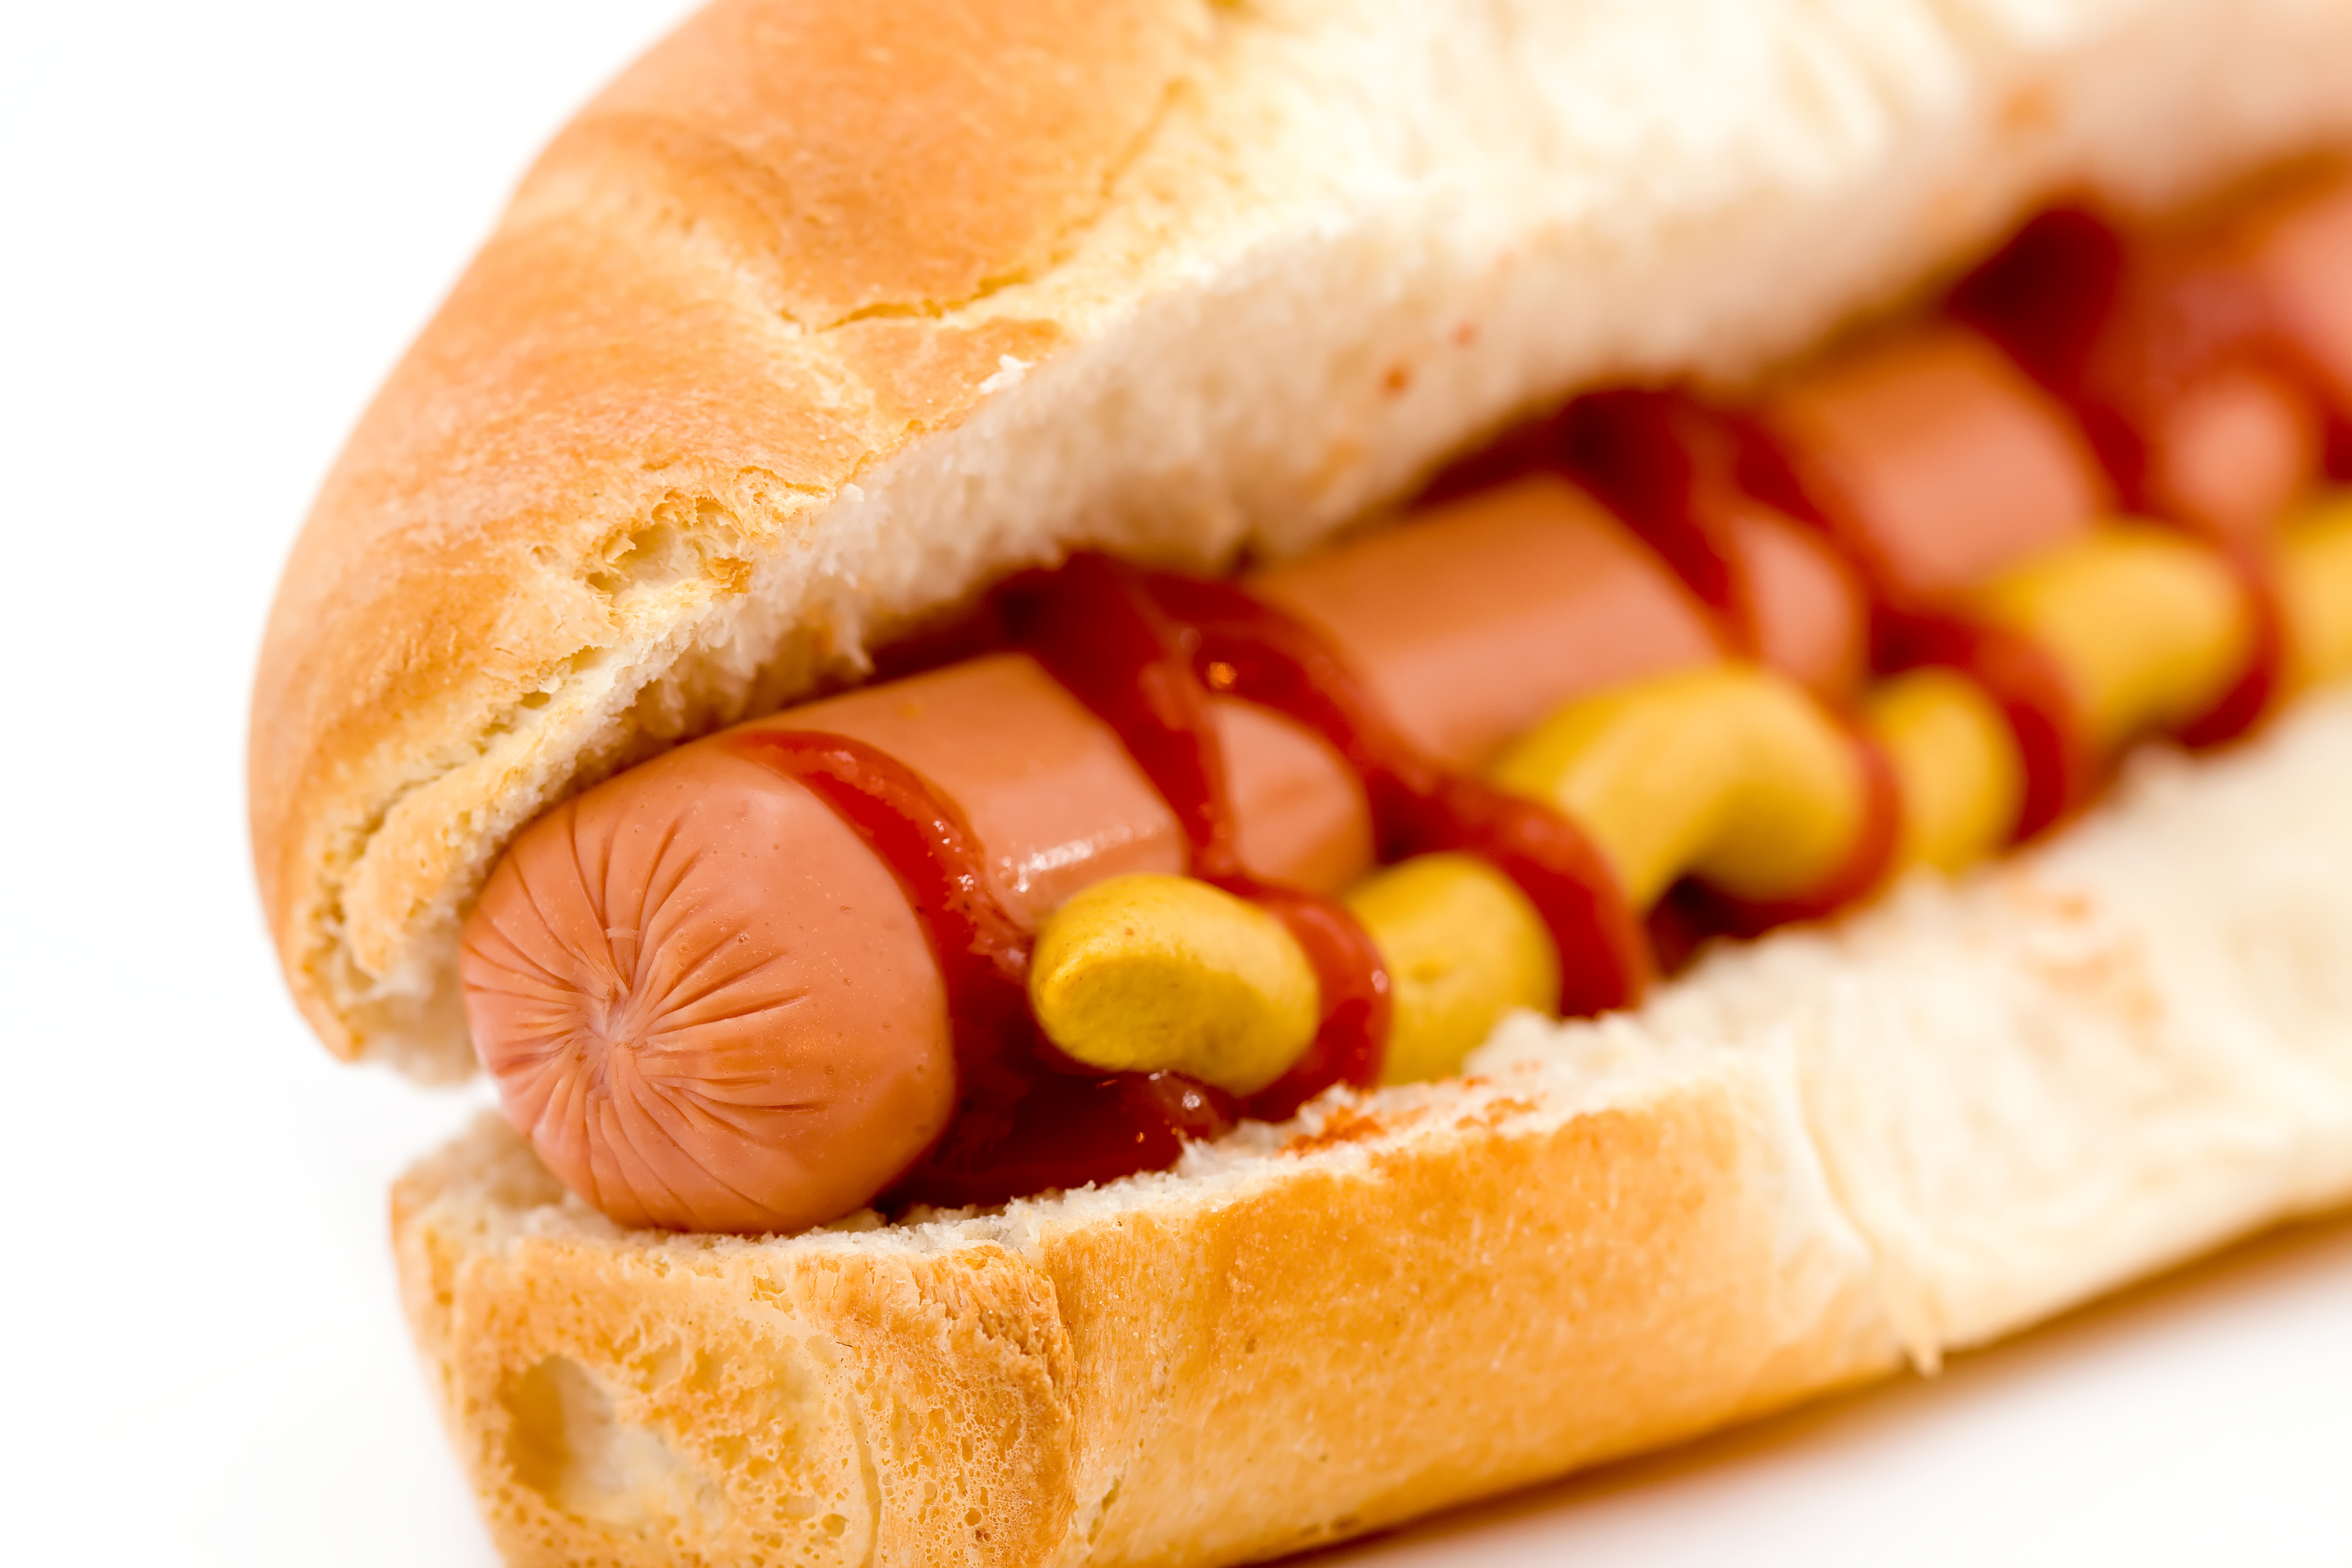 Hot Dog Pics, Food Collection